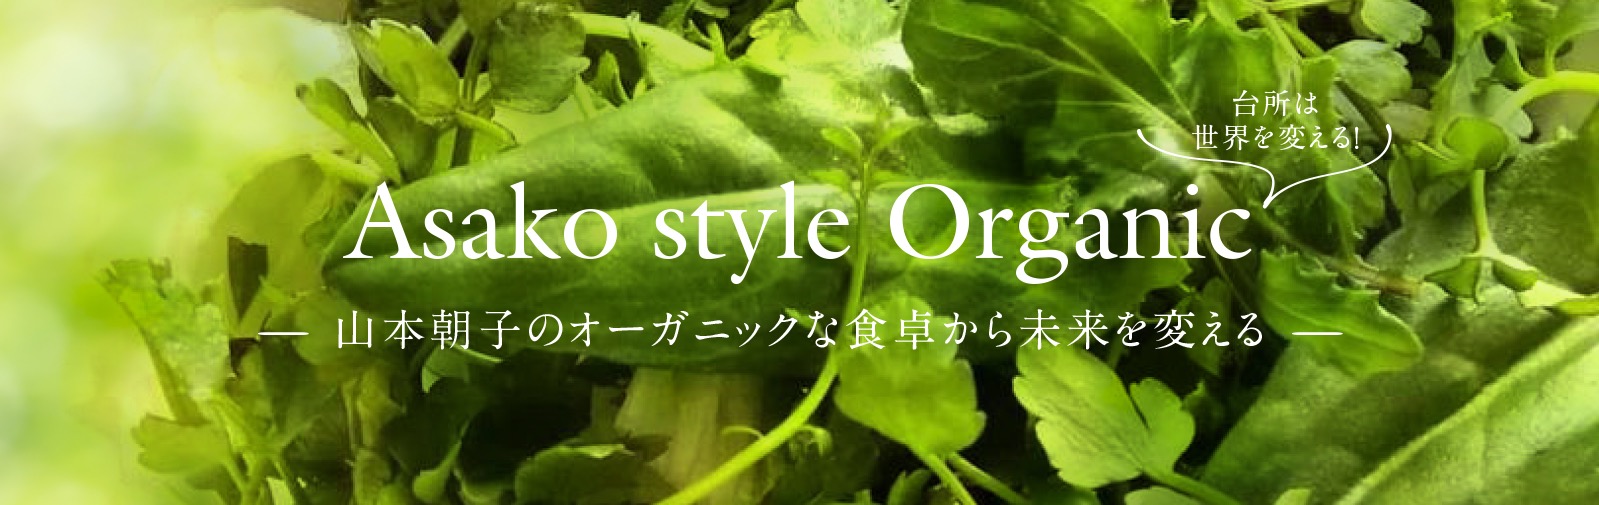 Asako style Organic